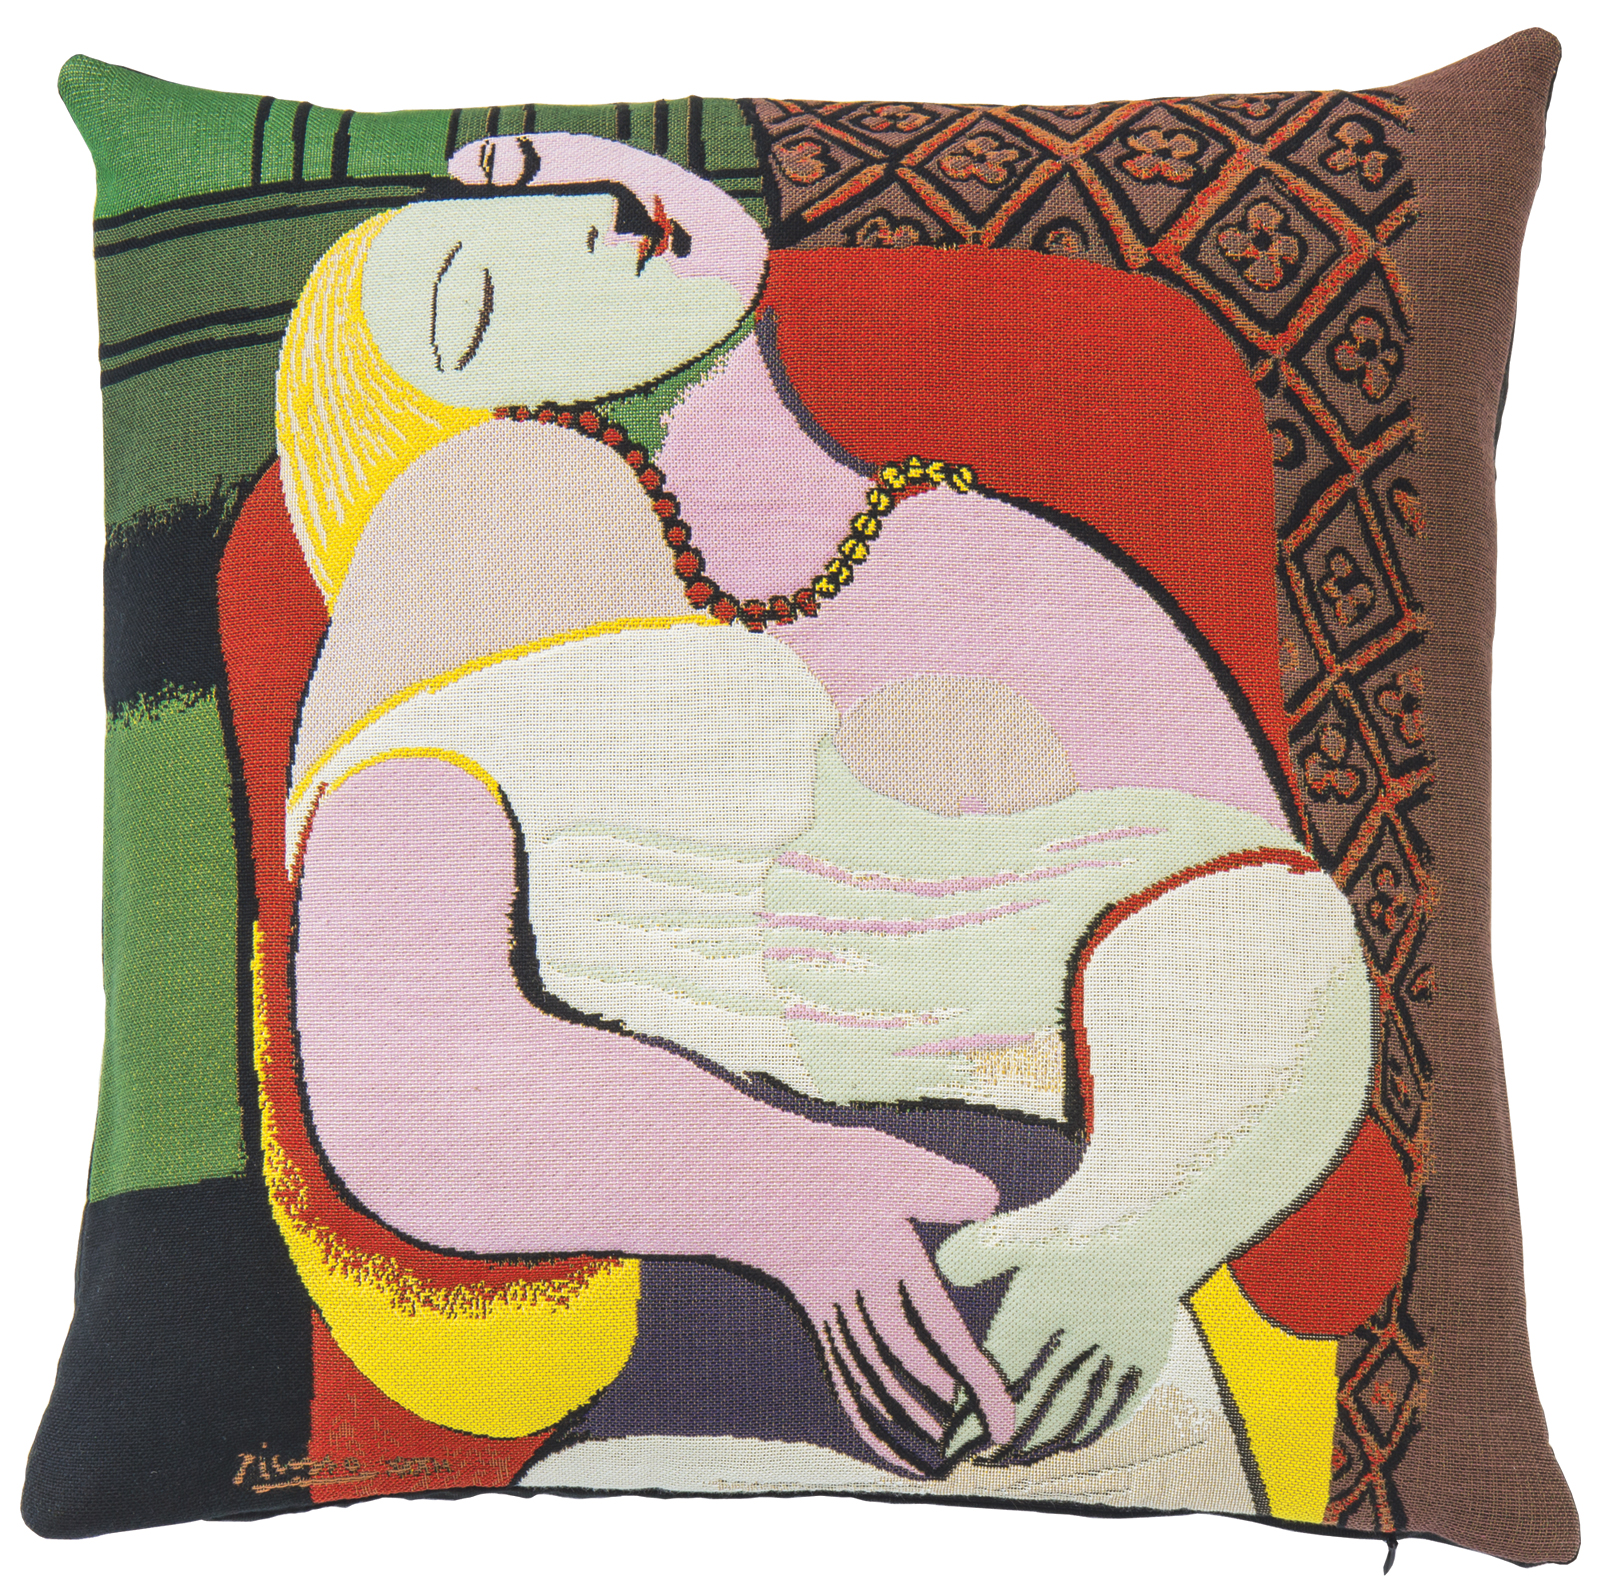 Kissenhülle "Le Rêve - Der Traum" (1932) von Pablo Picasso